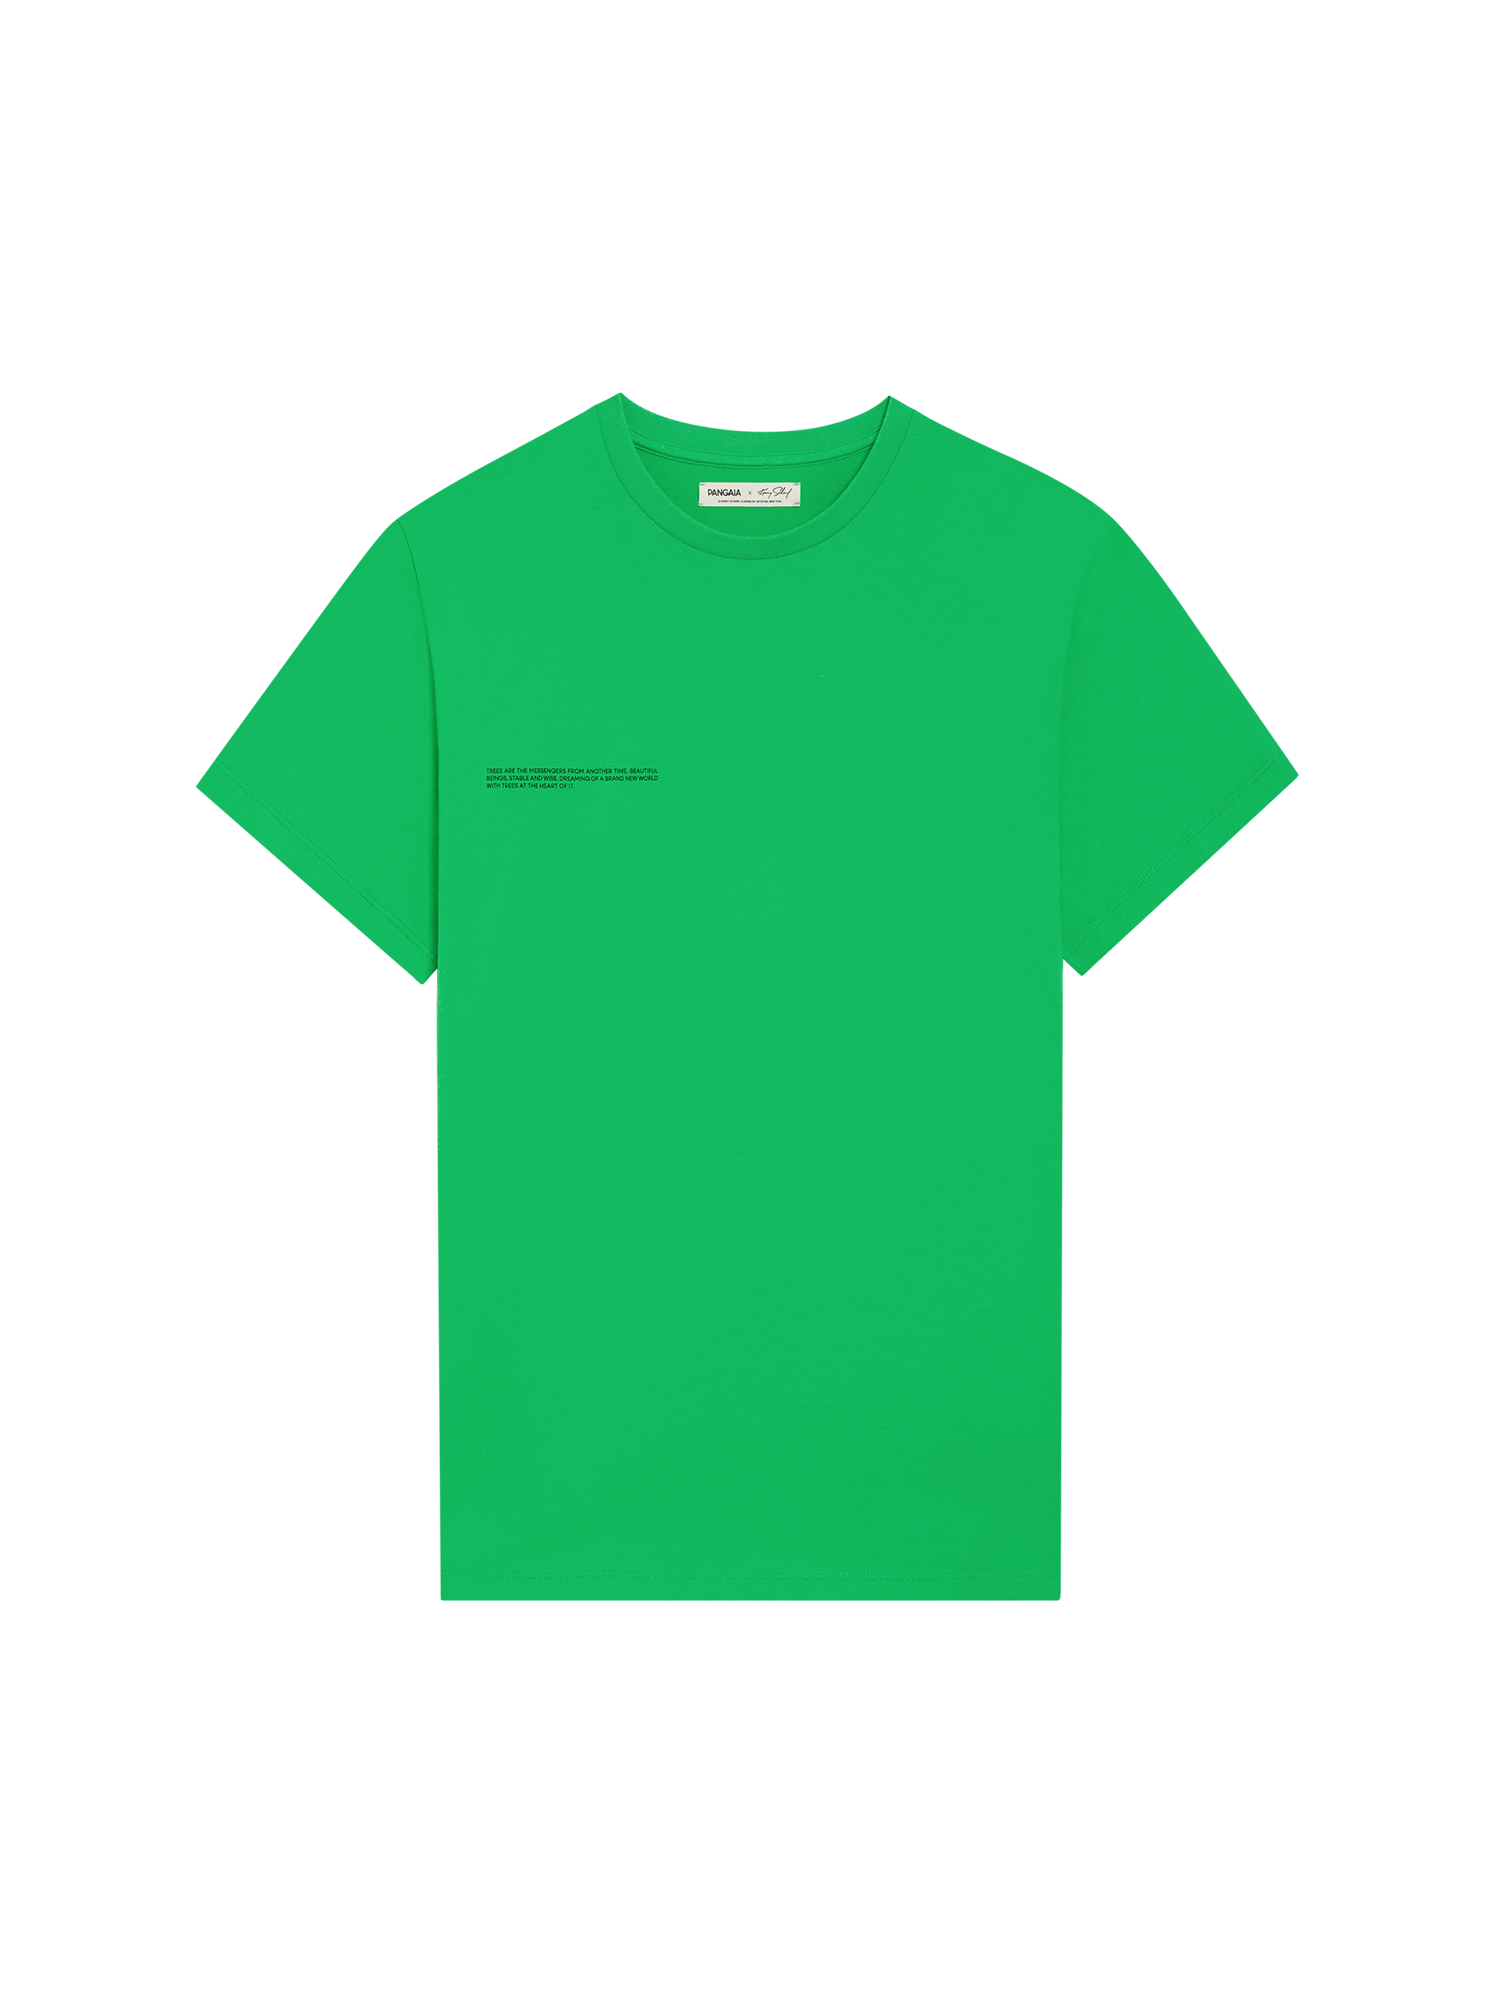 https://cdn.shopify.com/s/files/1/0035/1309/0115/products/Pangaia-Kenny-Scharf-Organic-Cotton-T-Shirt-Paradis-Perdu-Jade-Green-1.png?v=1662734802